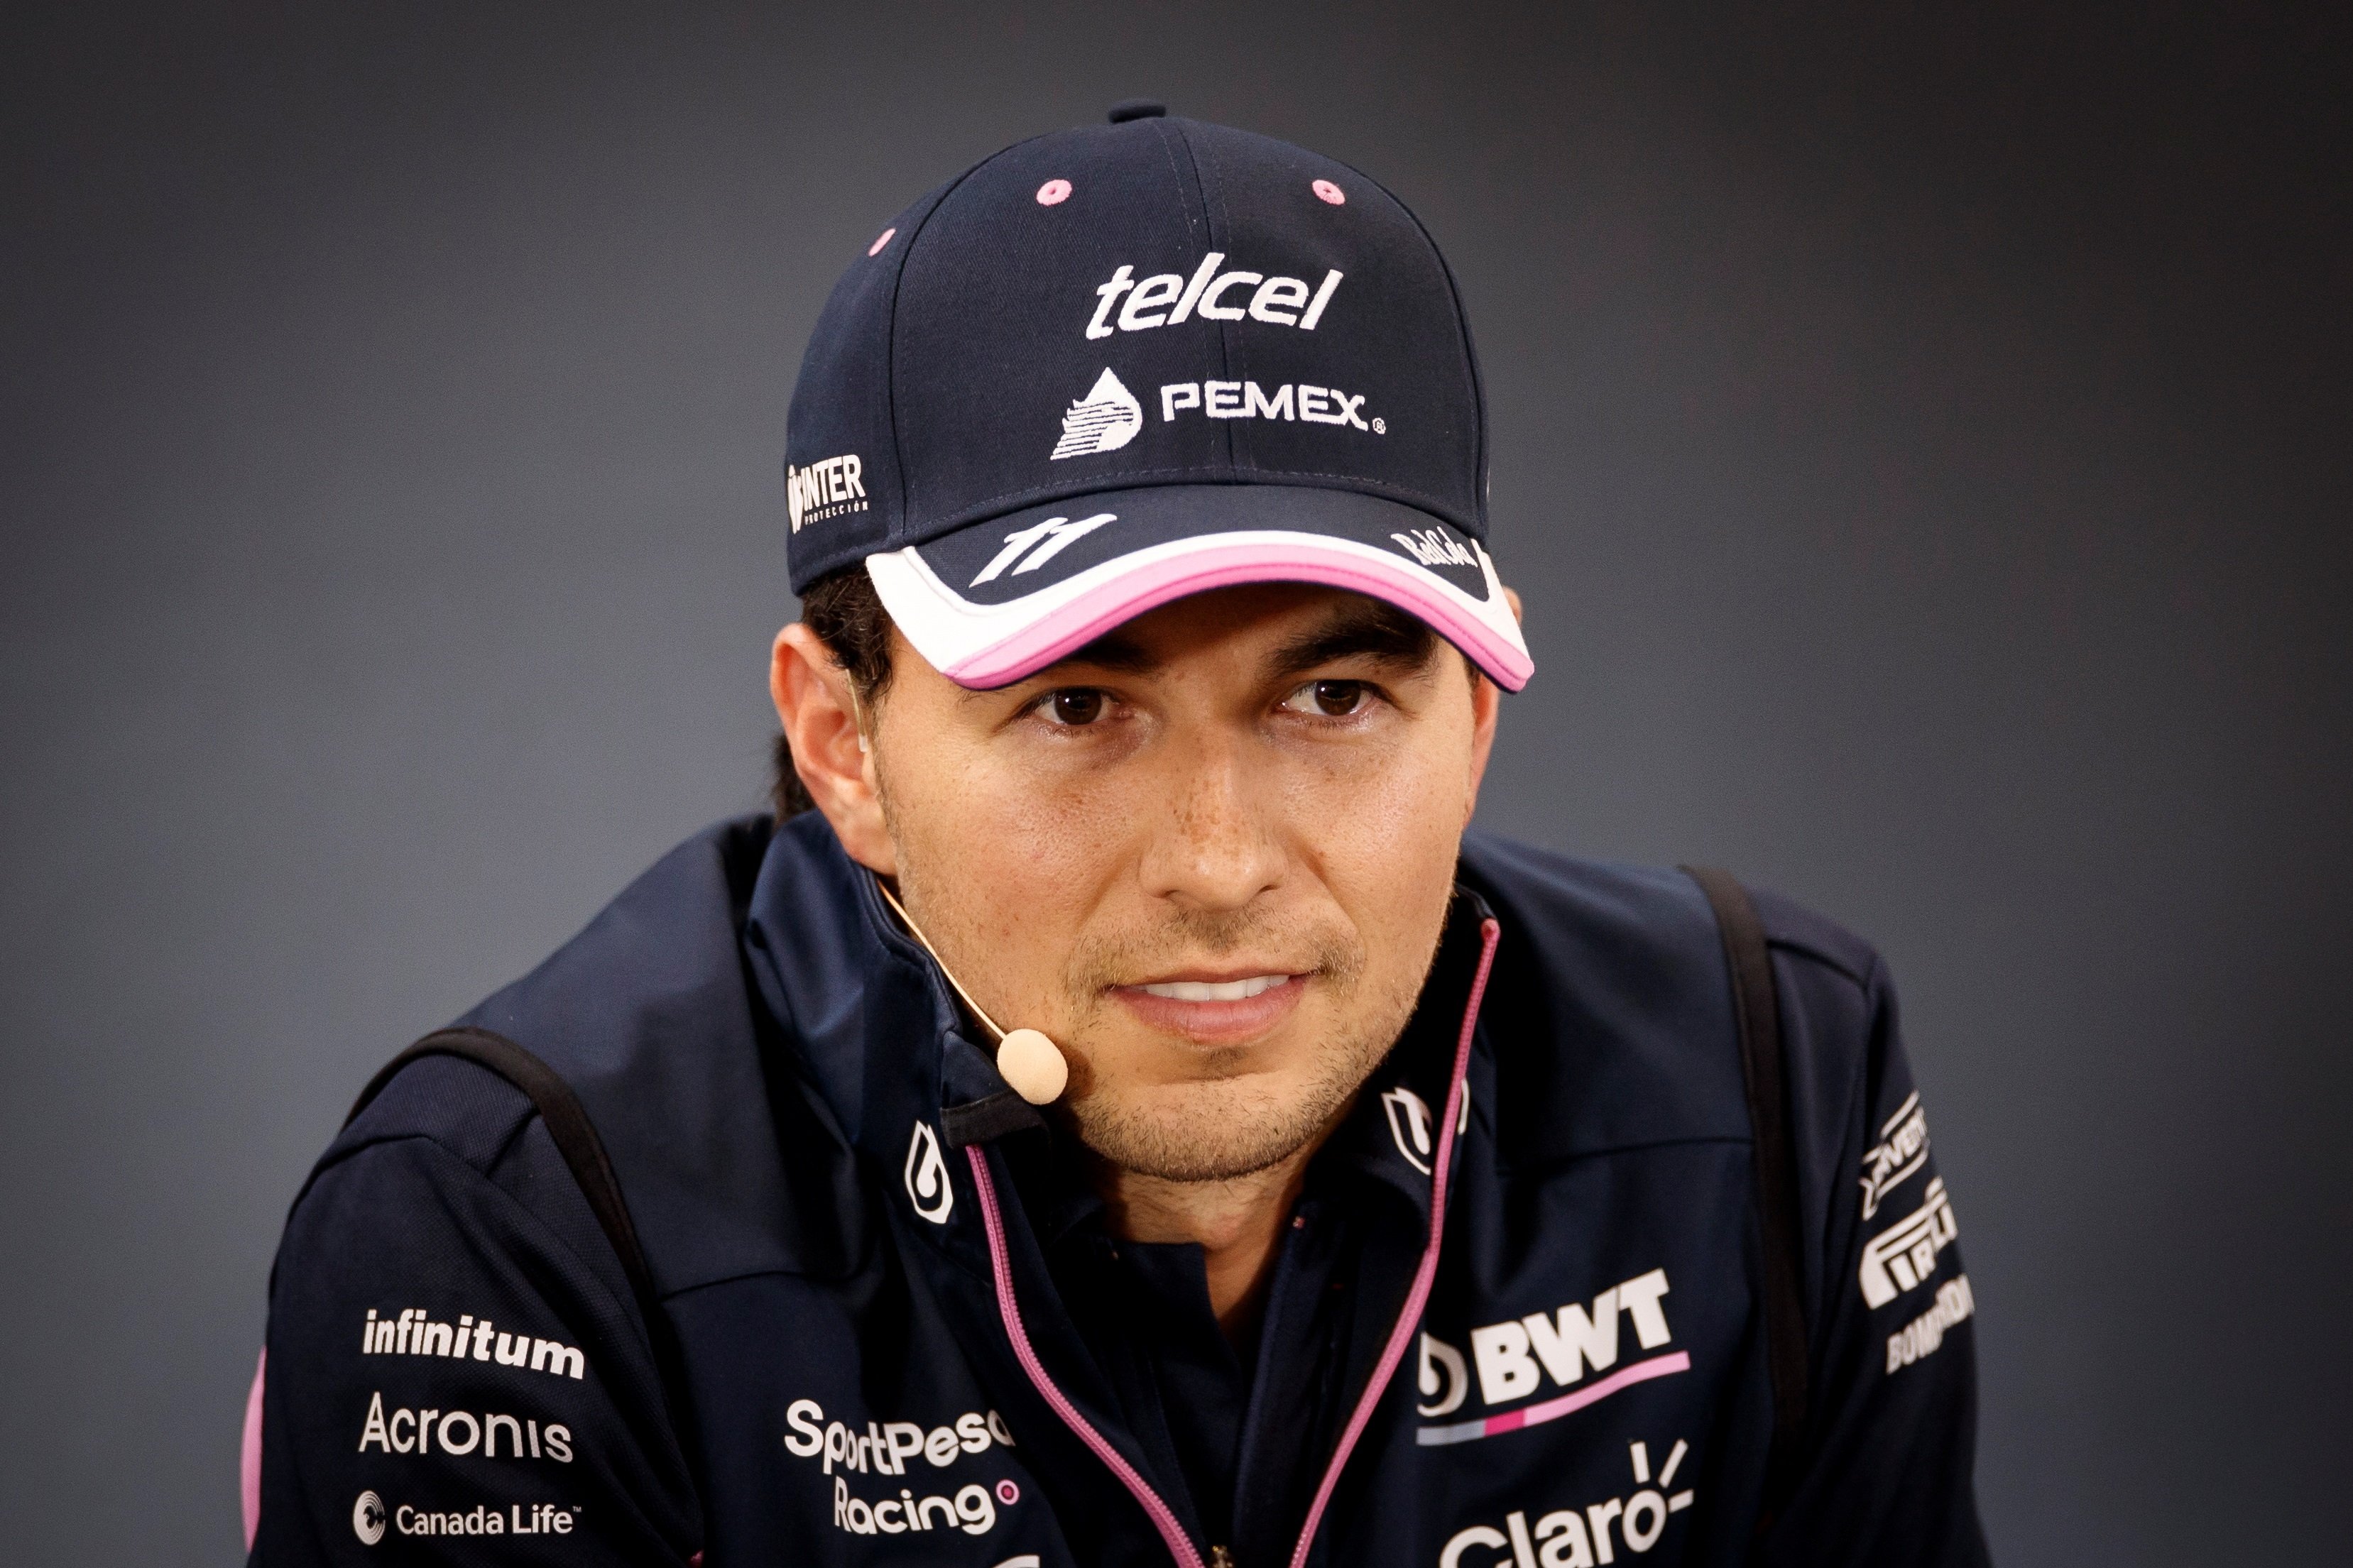 Red Bull fa 'bullying' a Checo Pérez per a afavorir Max Verstappen, testimoni demolidor